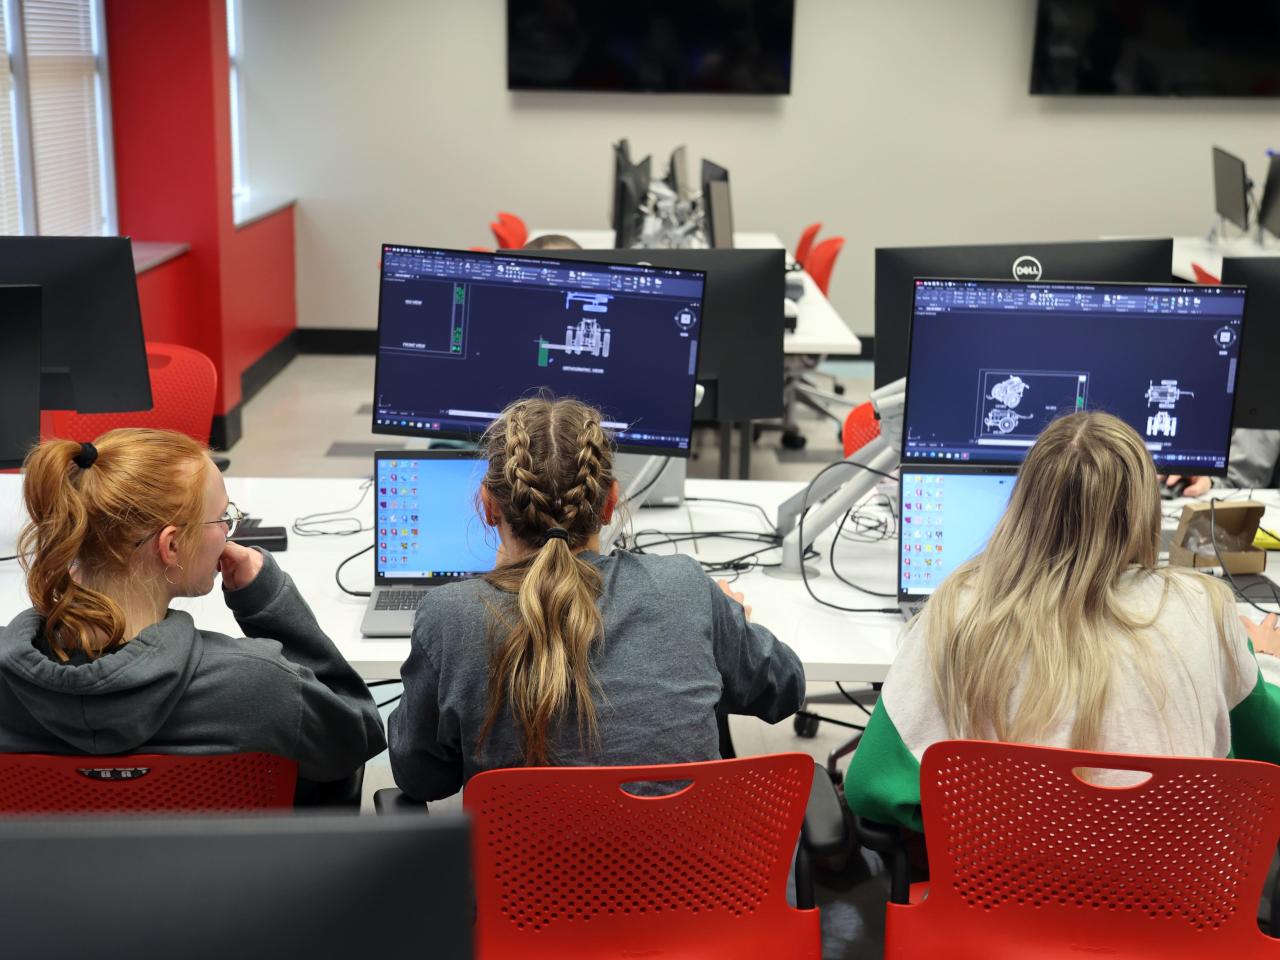 Three students practice autocad on computers